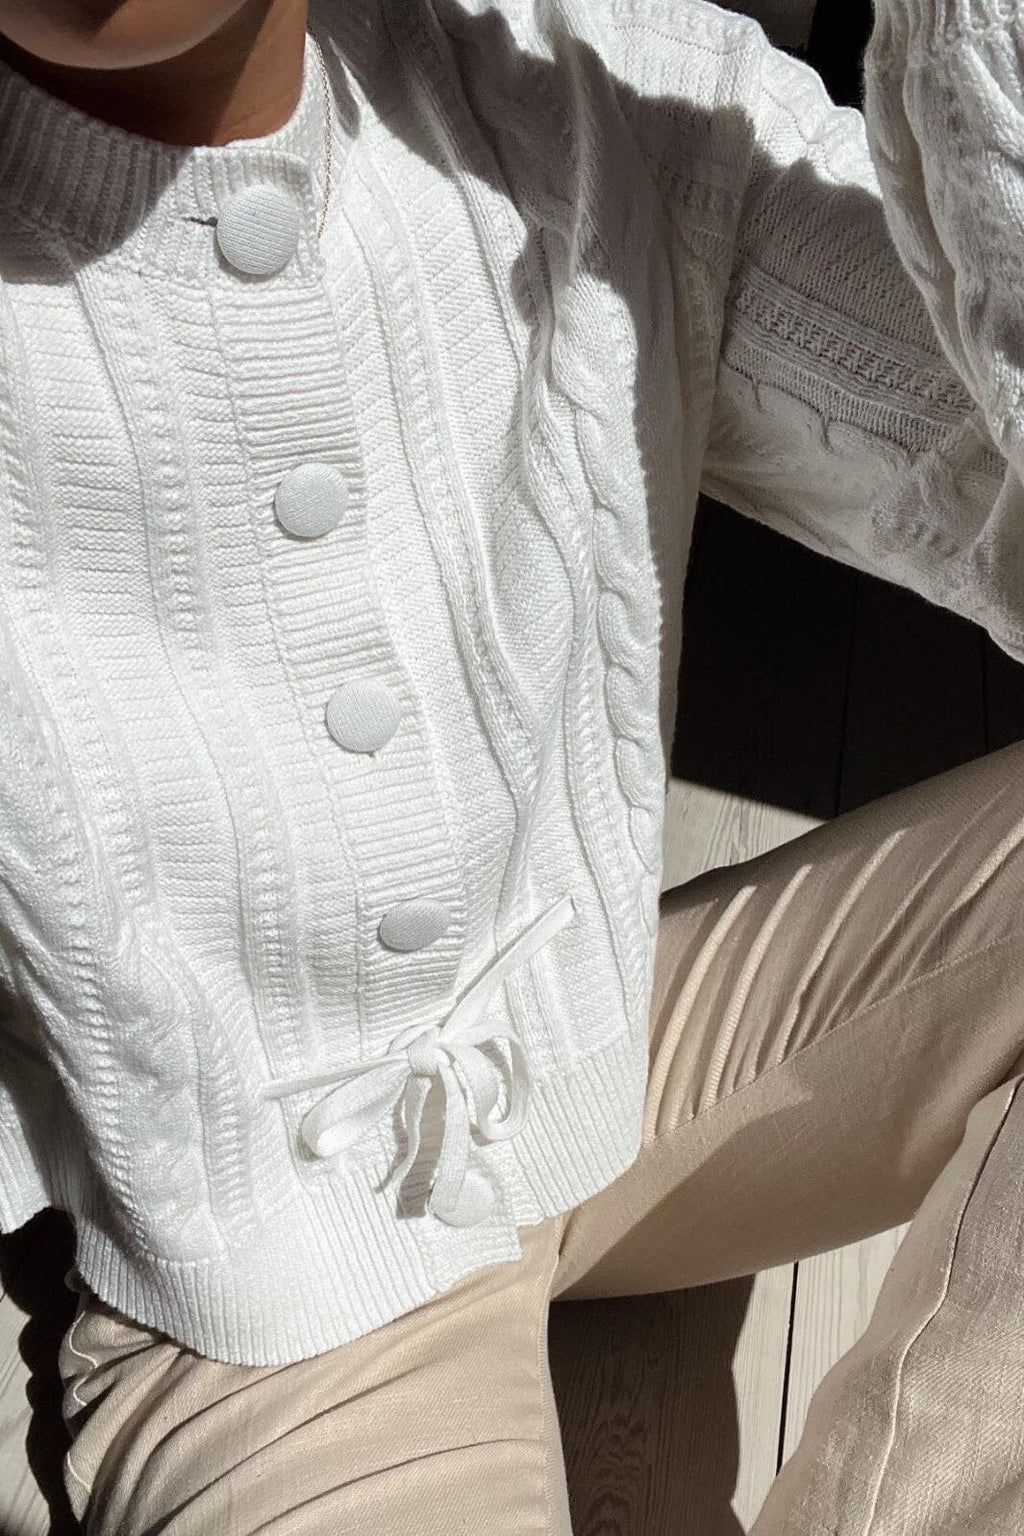 Precipice abort noget Neo Noir | Molina knit Cardigan - Off white » Molly&My